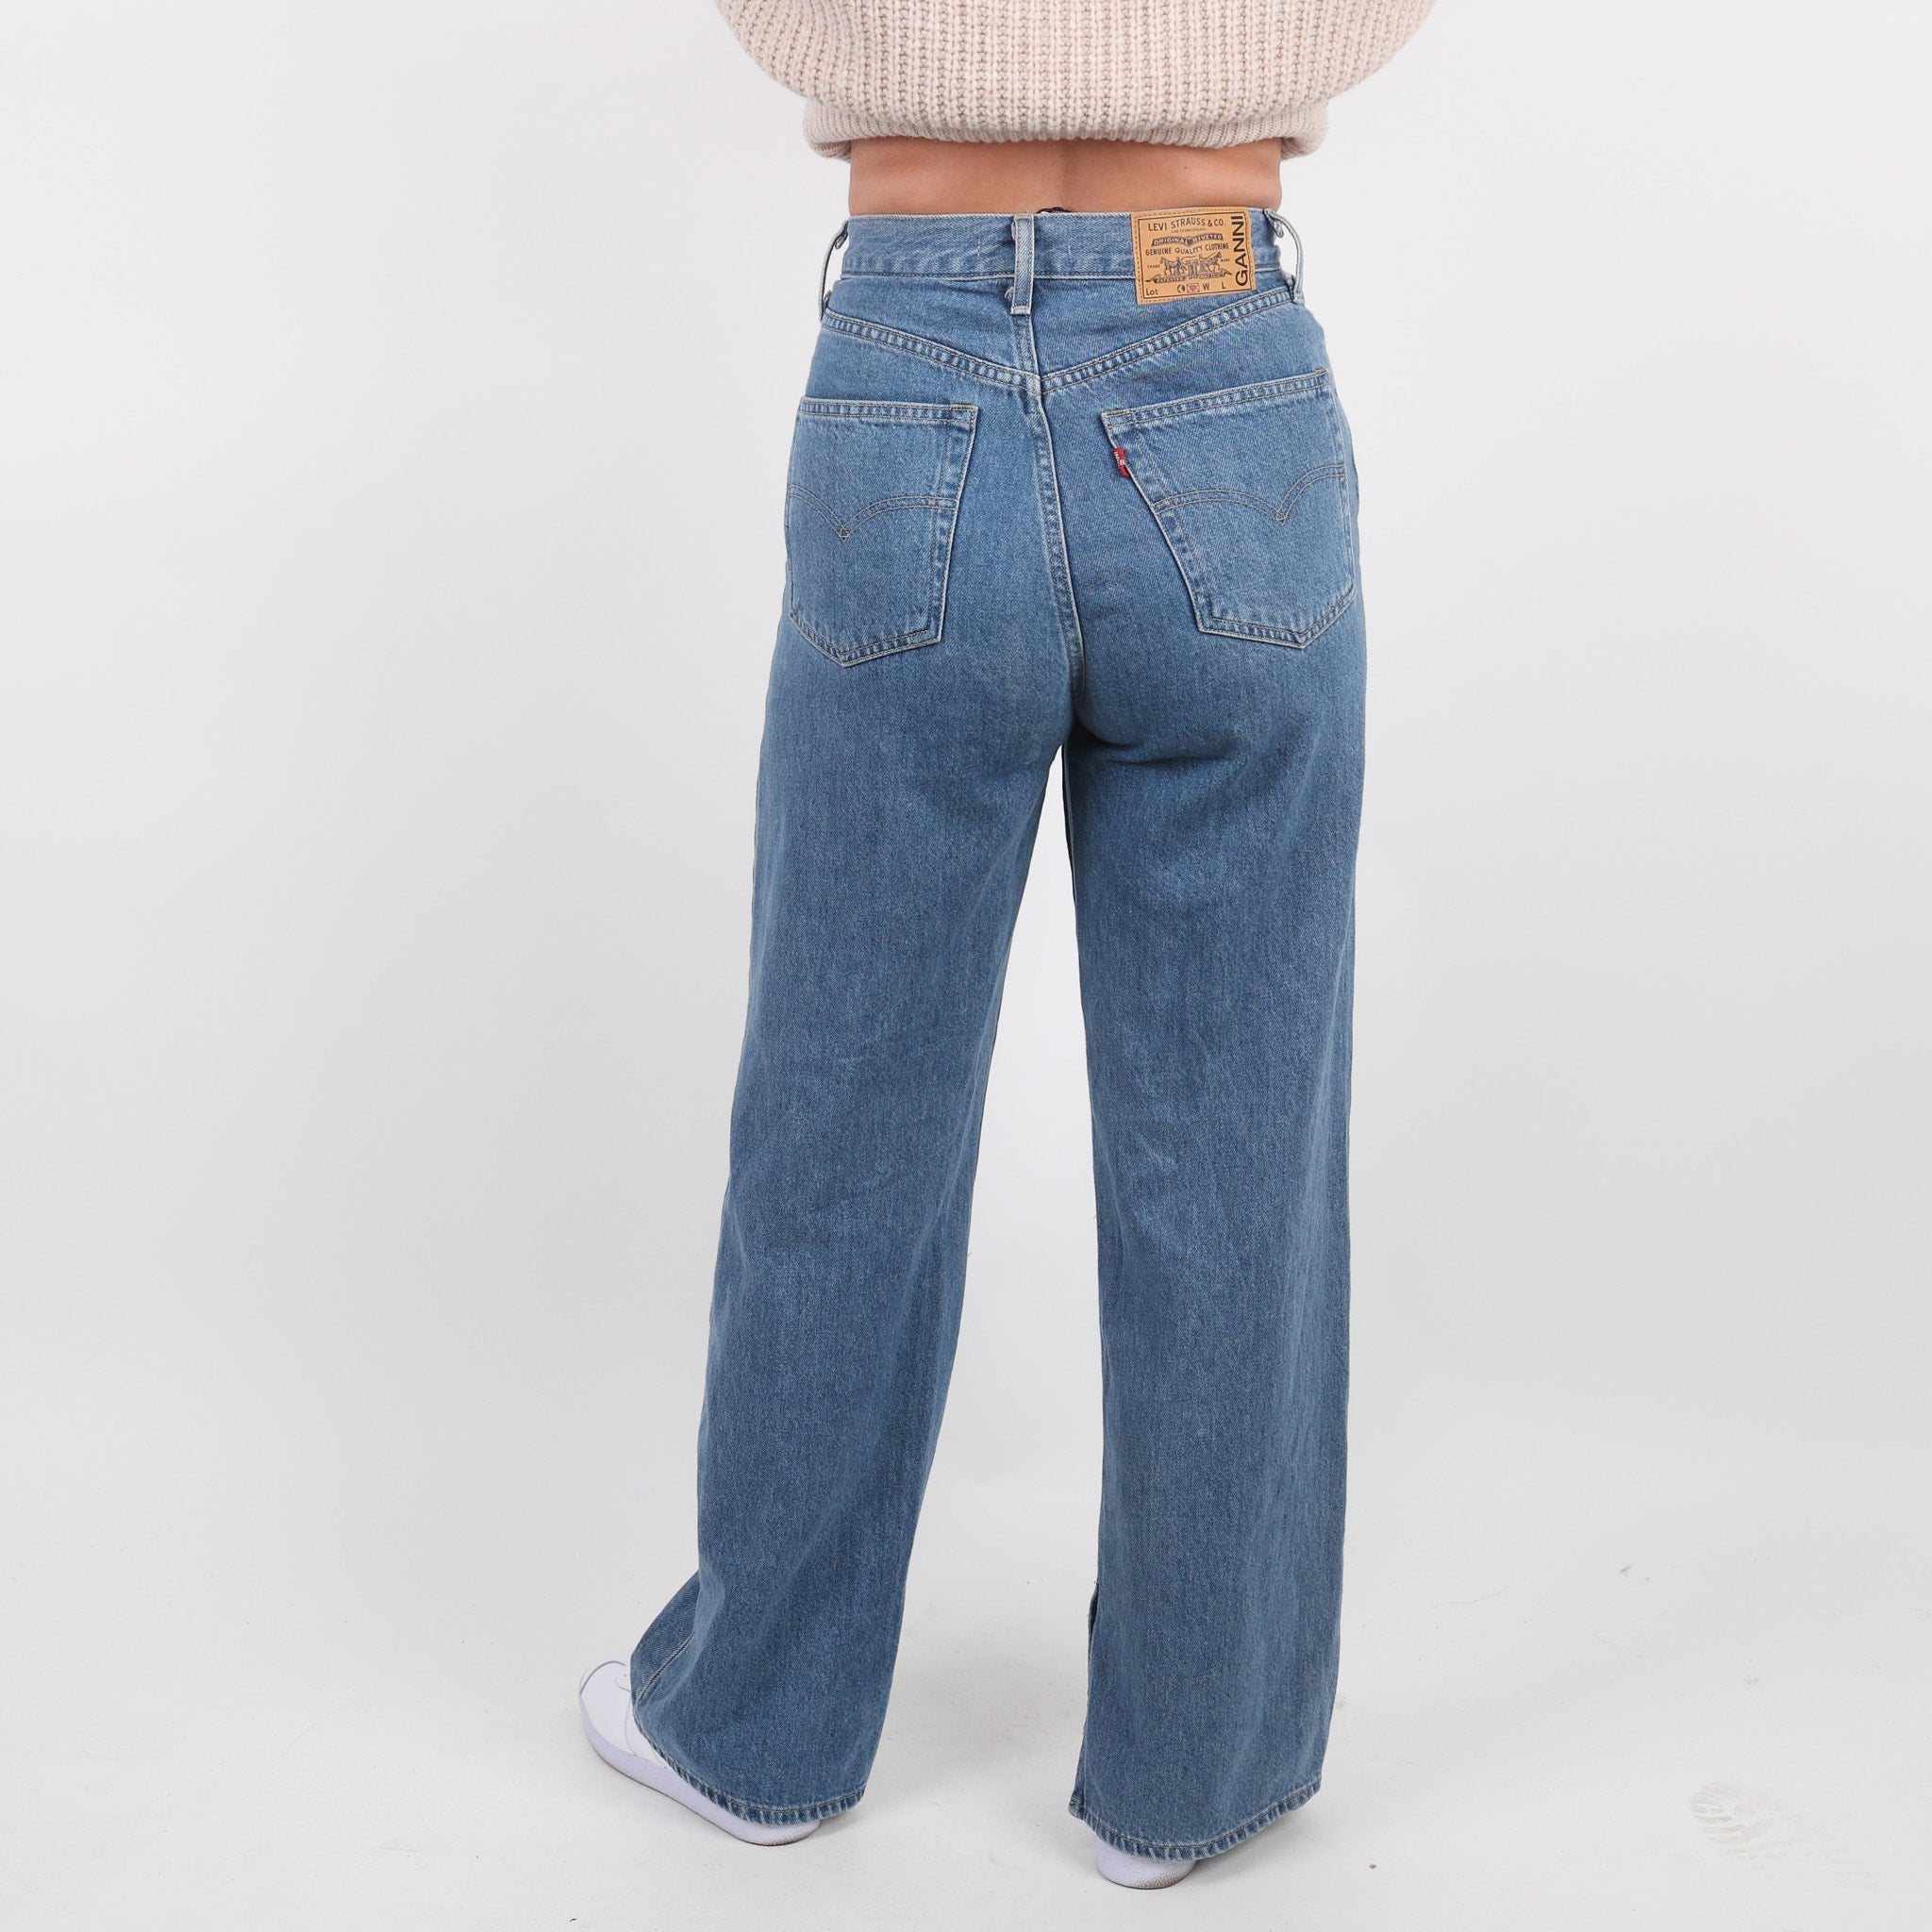 Jeans, Waist 27